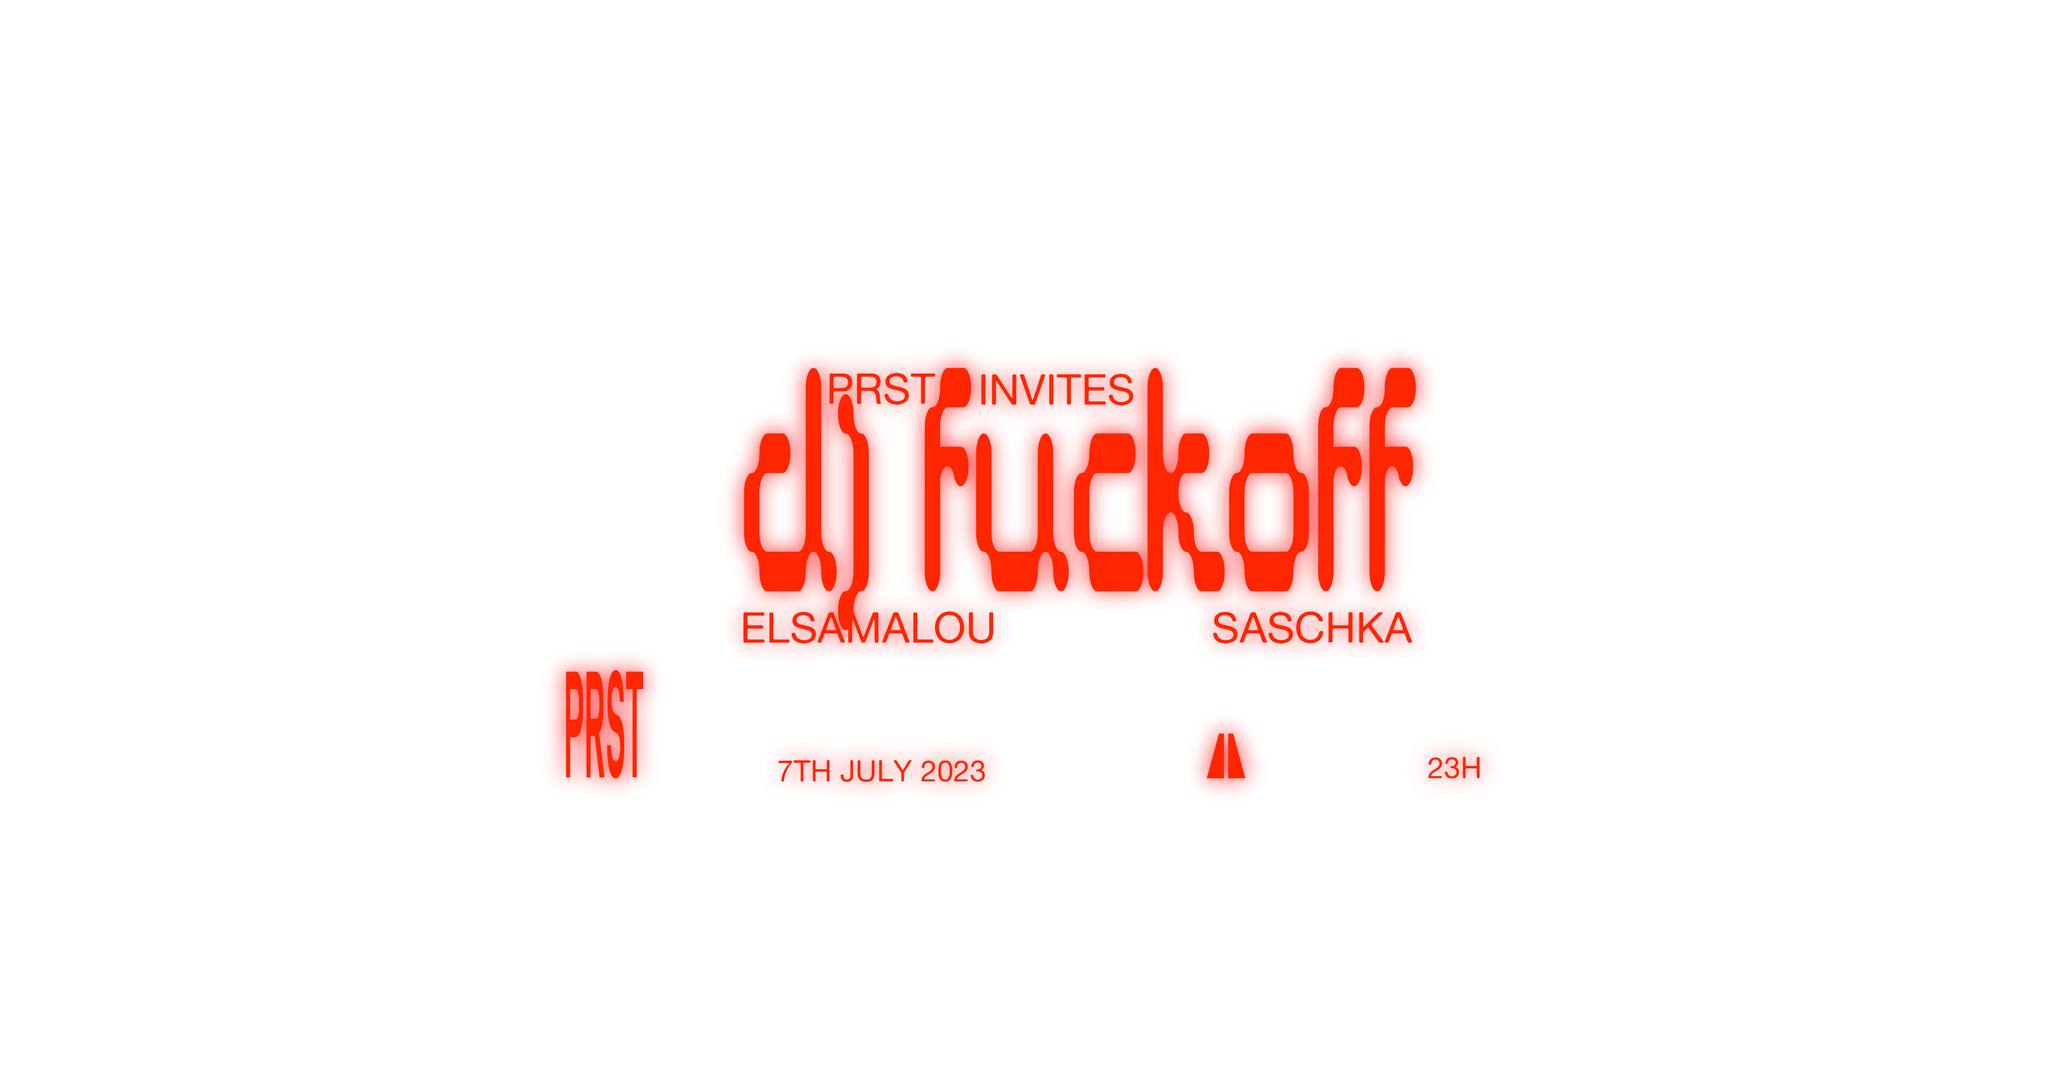 PRST invites DJ FUCKOFF am 7. July 2023 @ Praterstrasse / PRST.